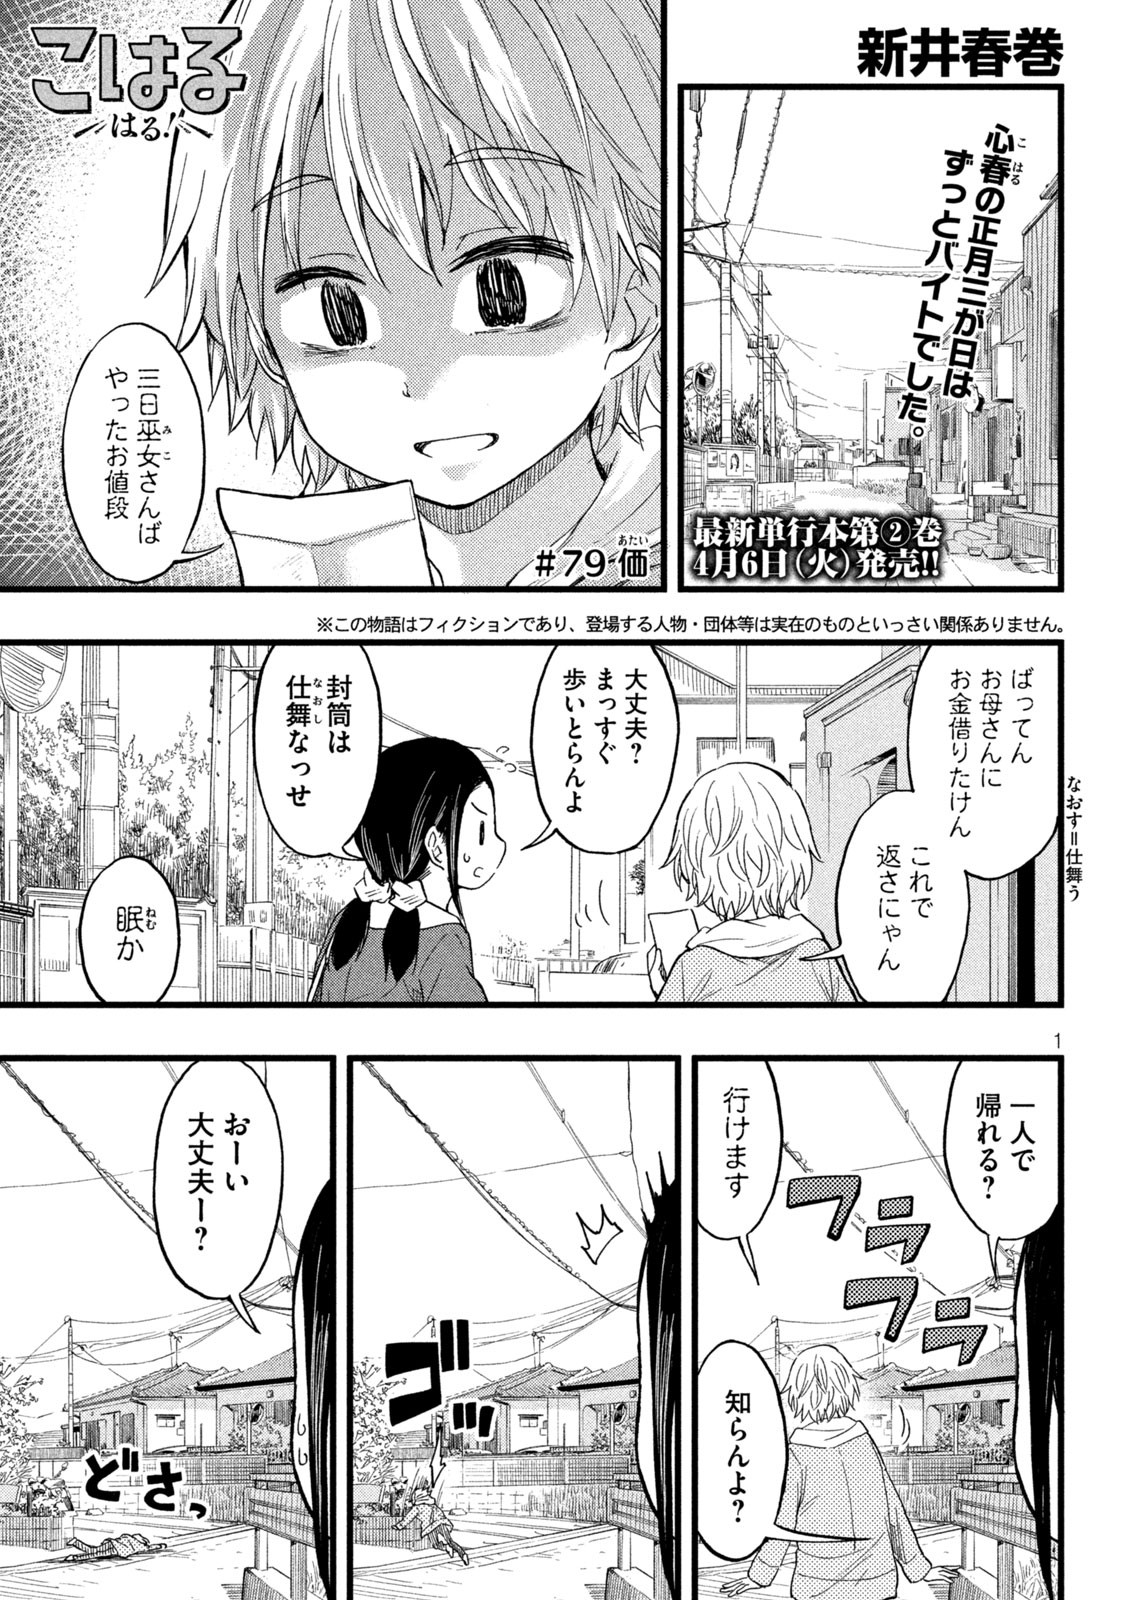 Koharu haru! - Chapter 79 - Page 1